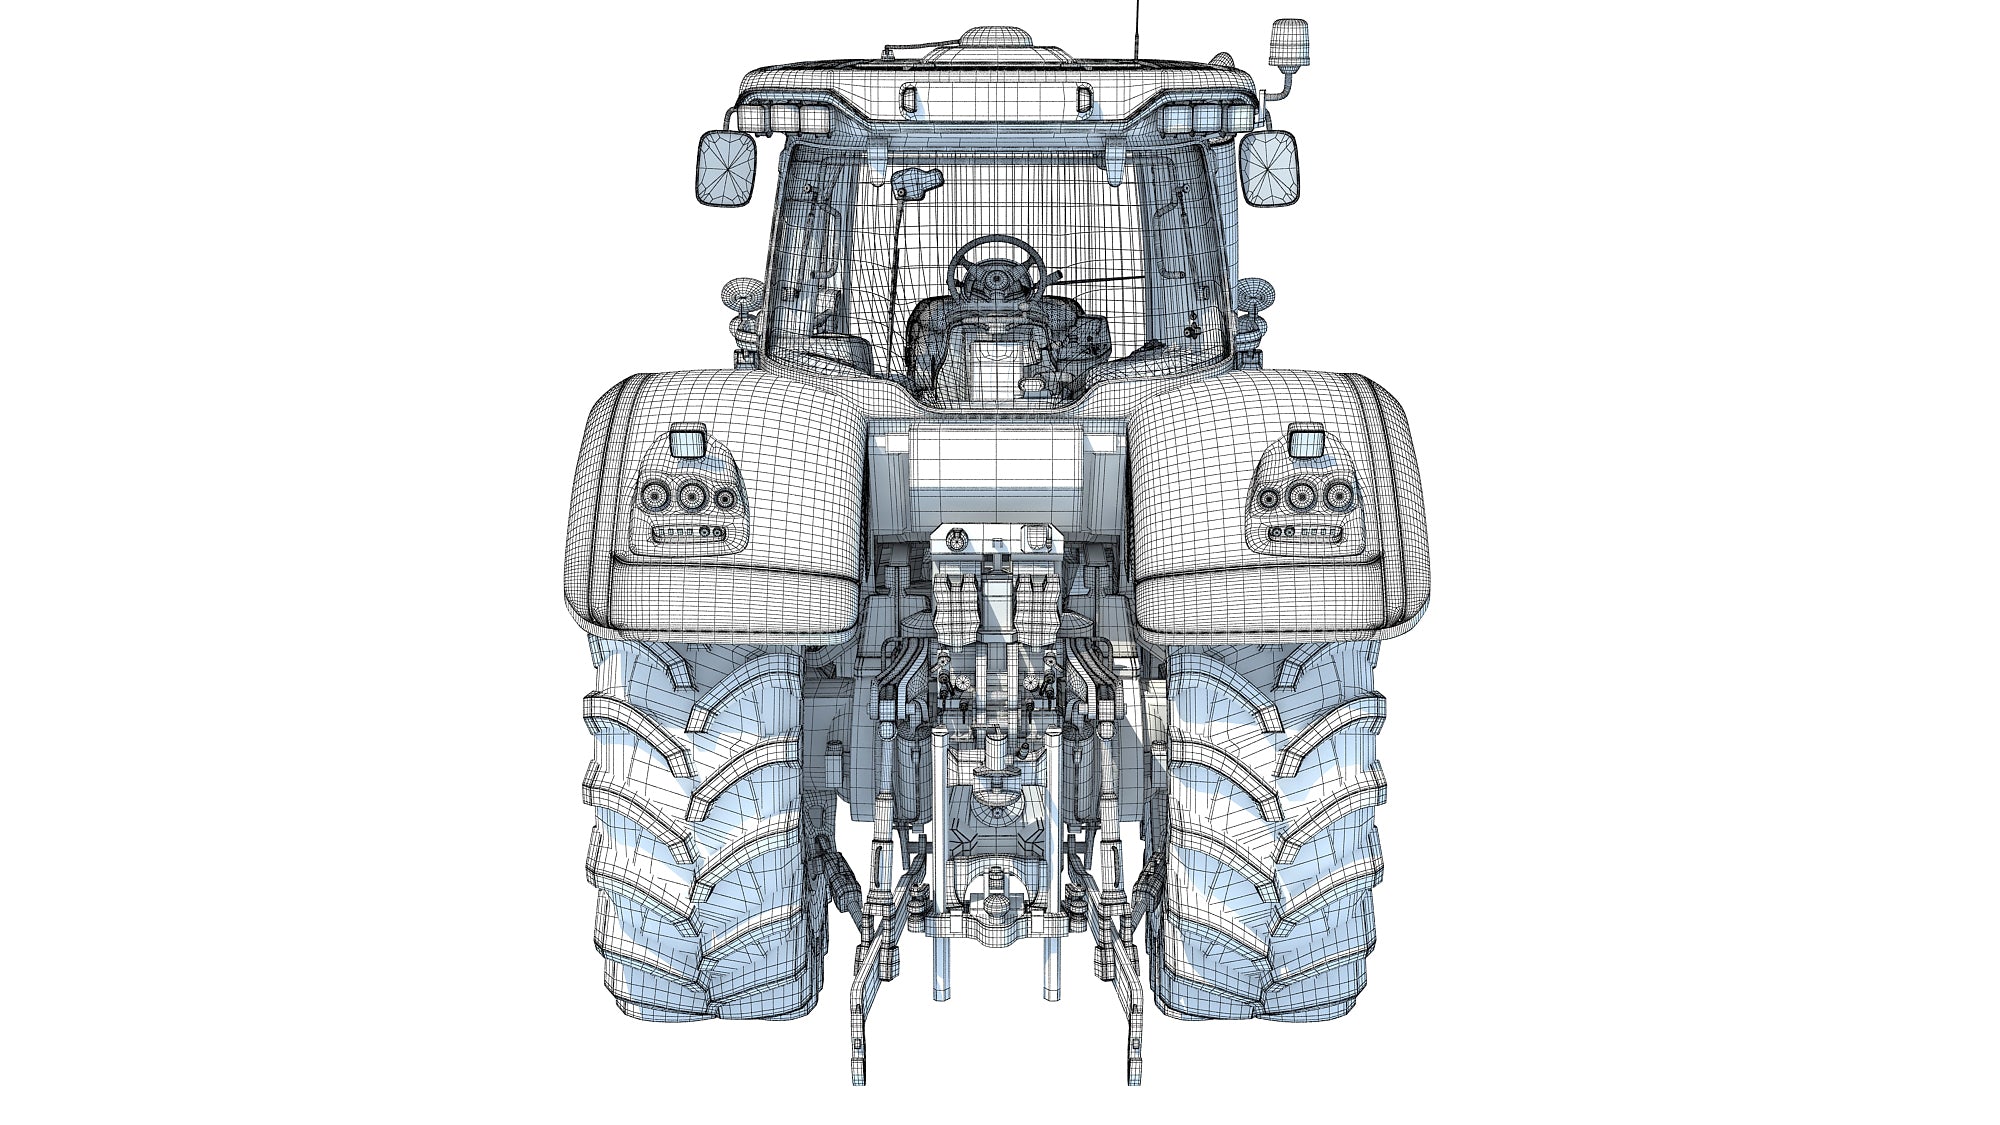 Valtra Tractor S4 Series